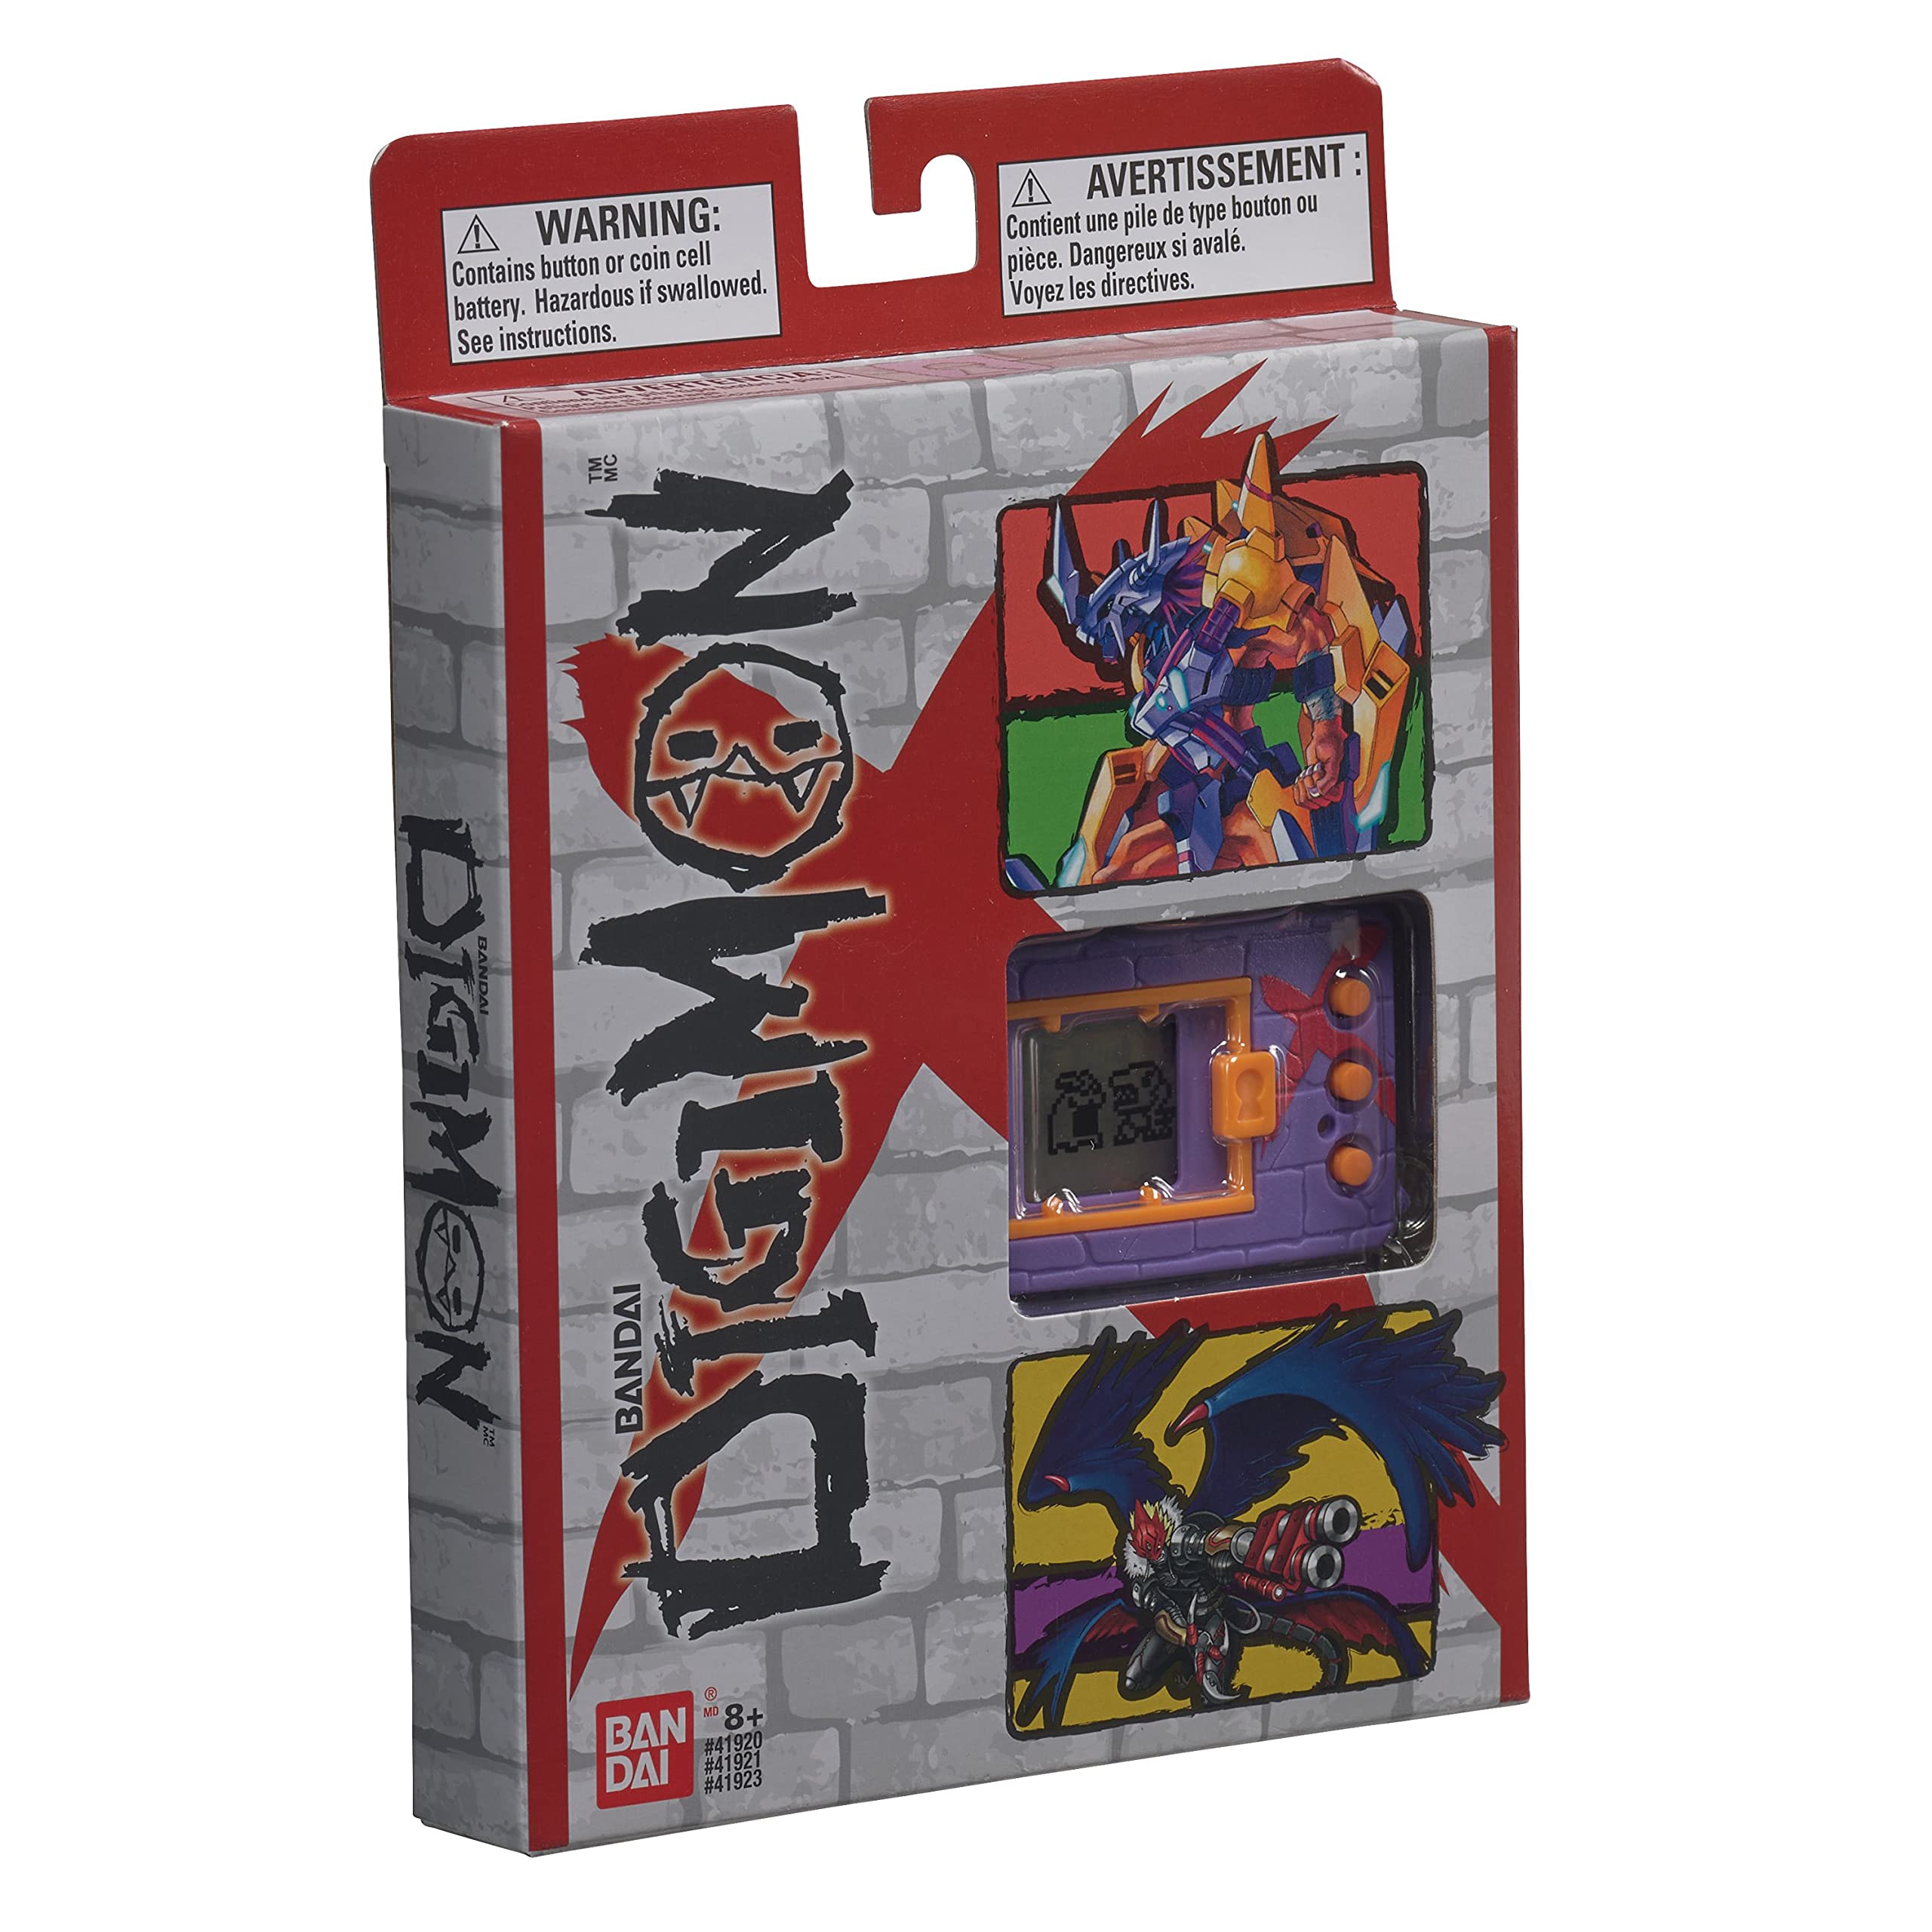 DIGIMON X Bandai Digivice Virtual Pet Monster - Purple & Red (41923) (Pack of 5)